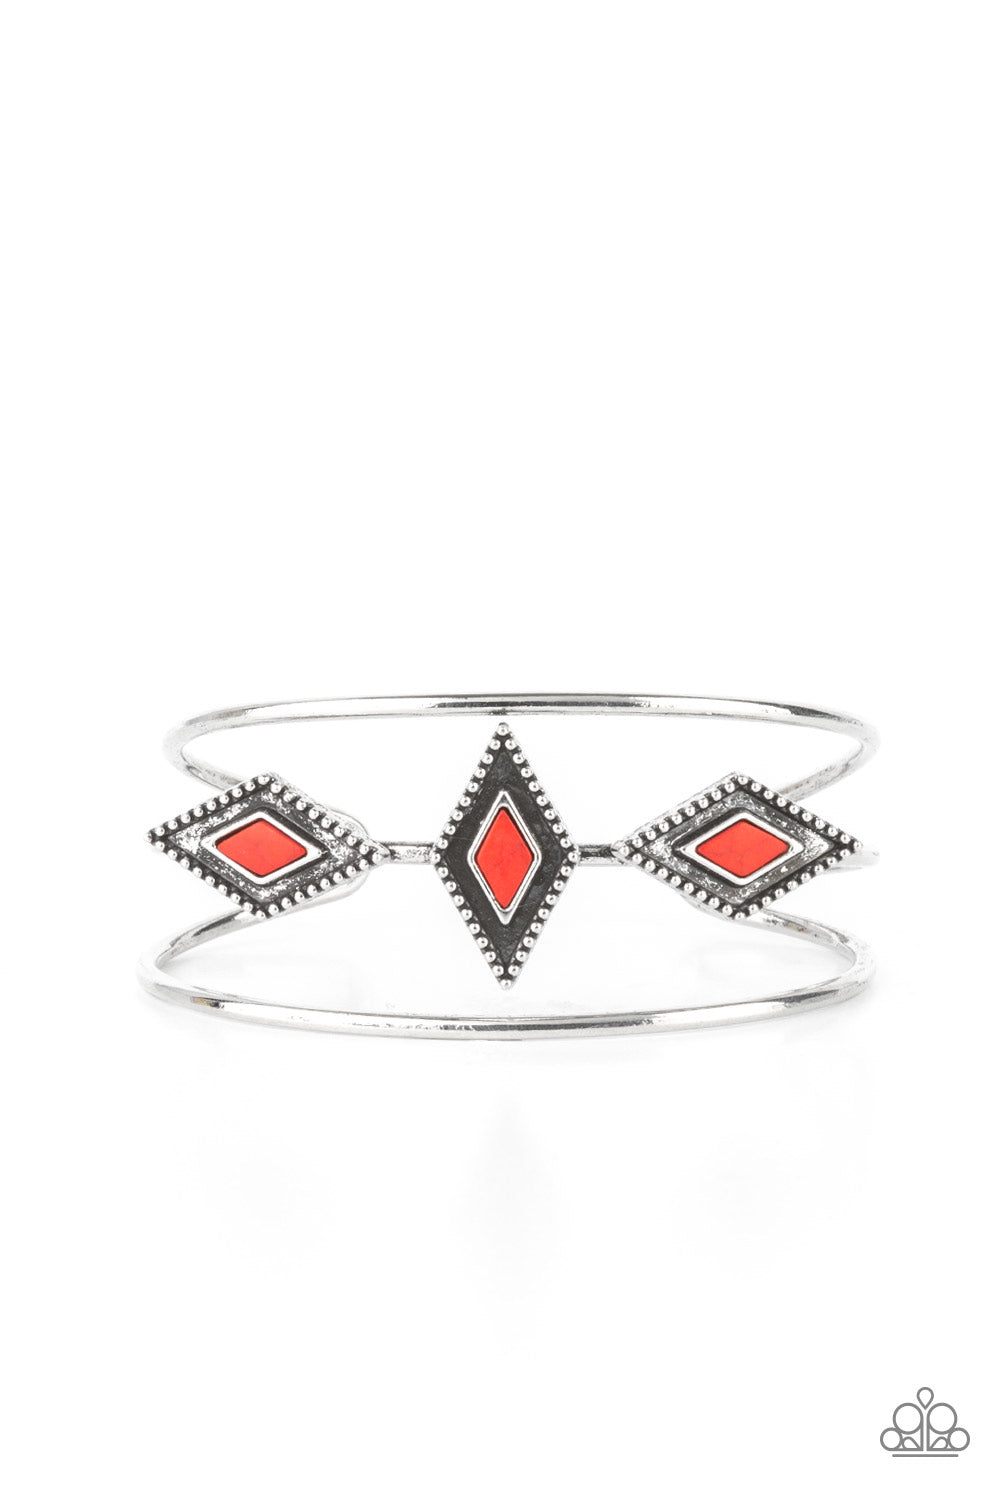 Desert Diamondback - red - Paparazzi bracelet